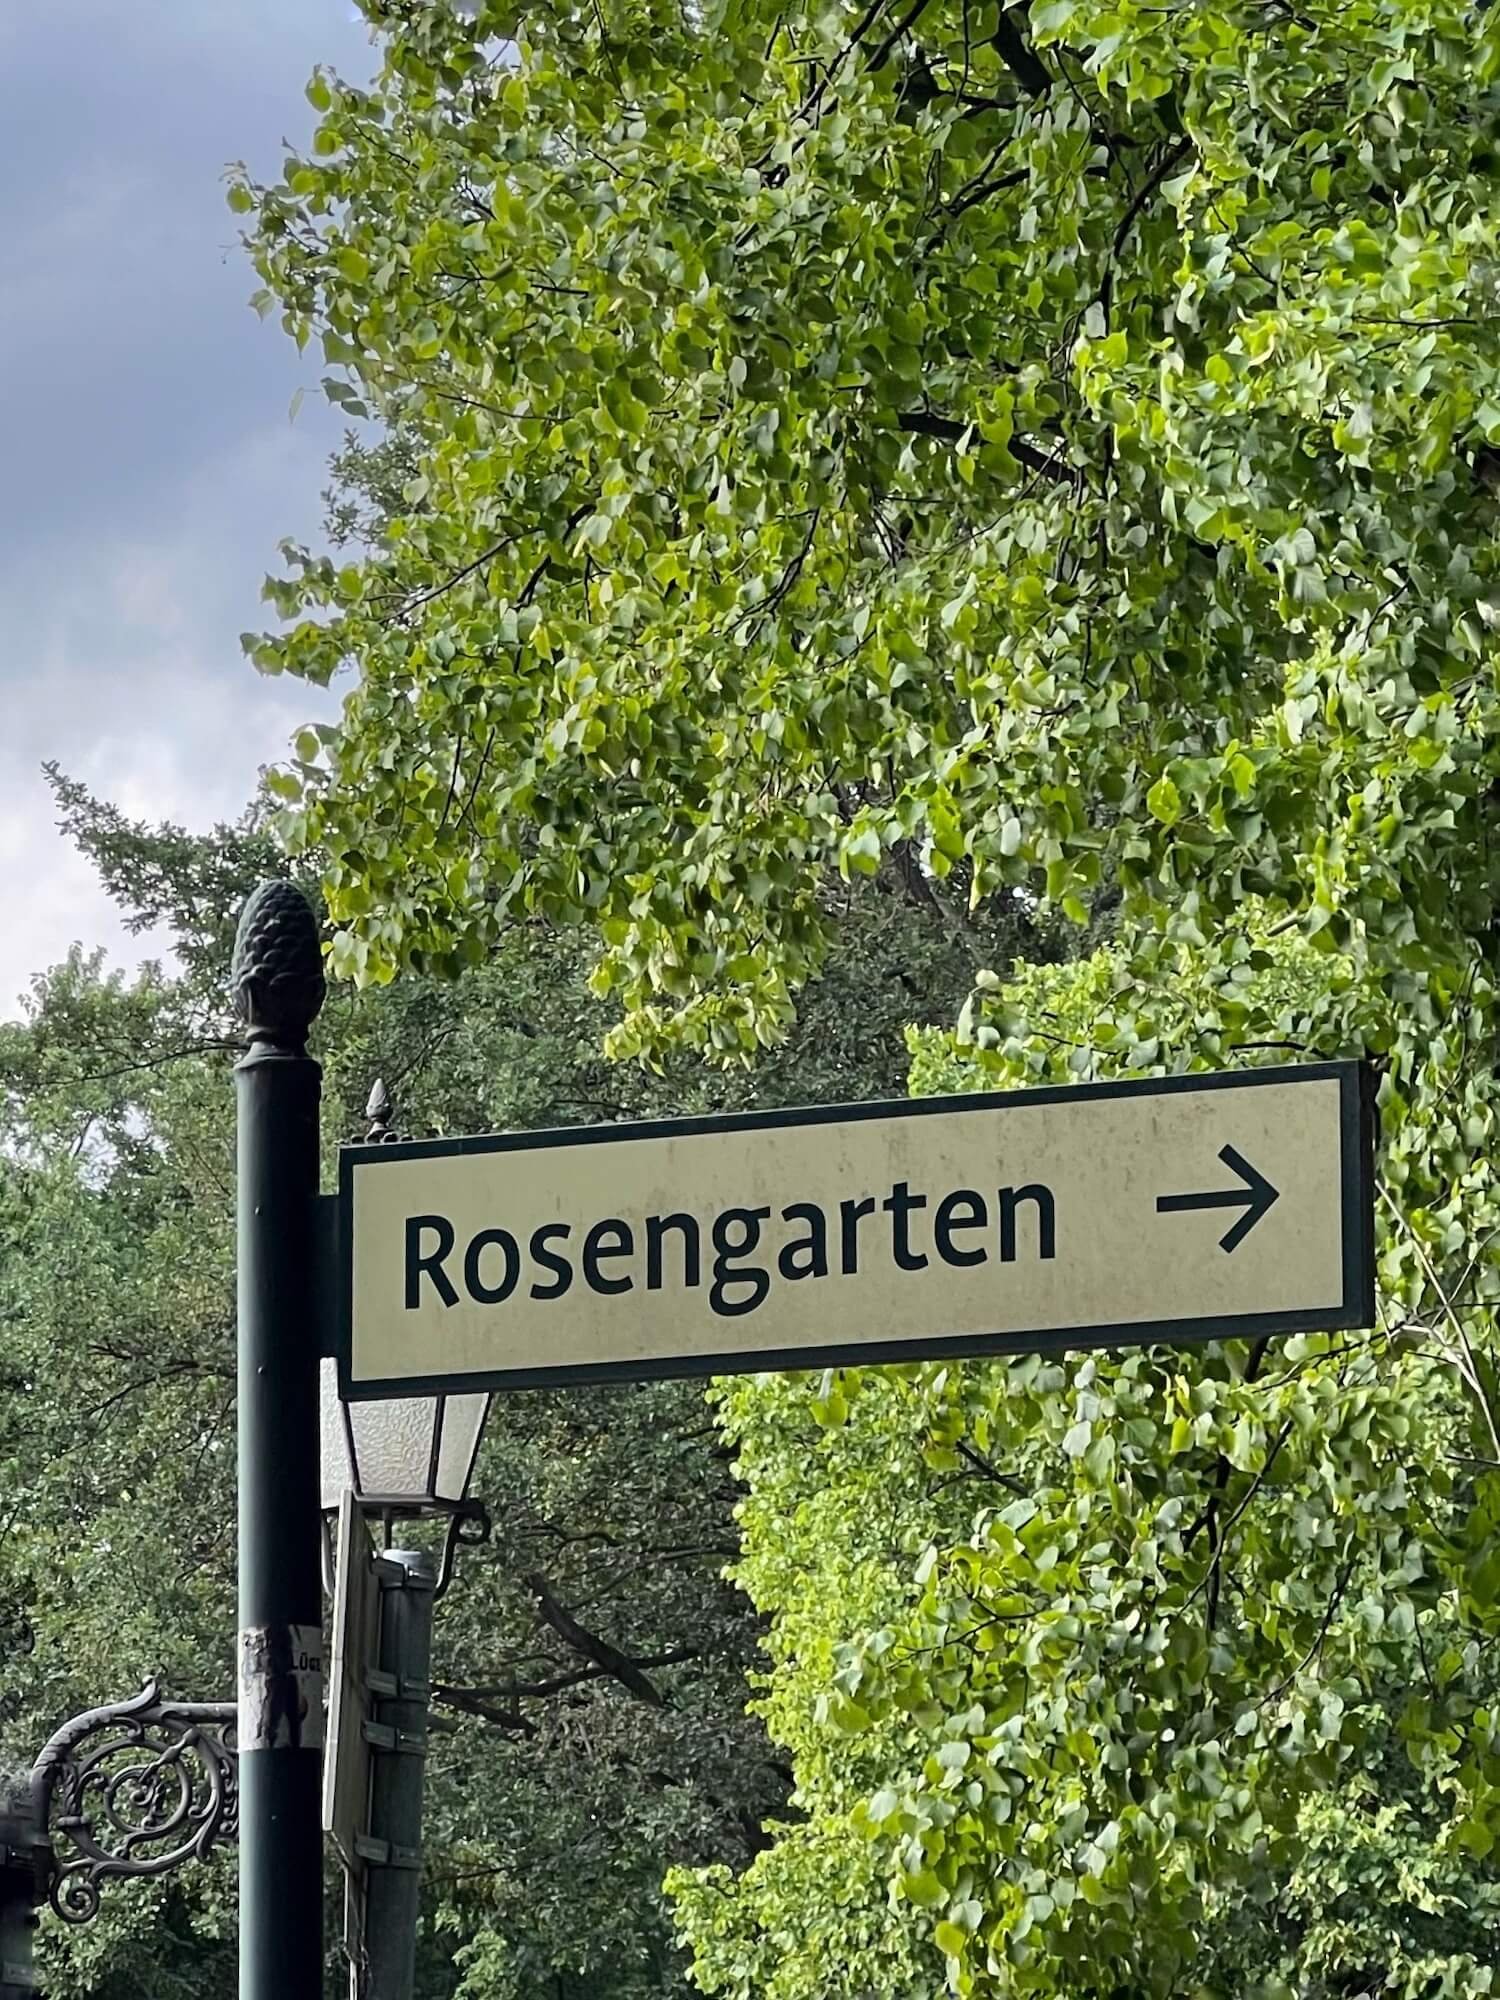 rose garden sign at the tiergarten.JPG